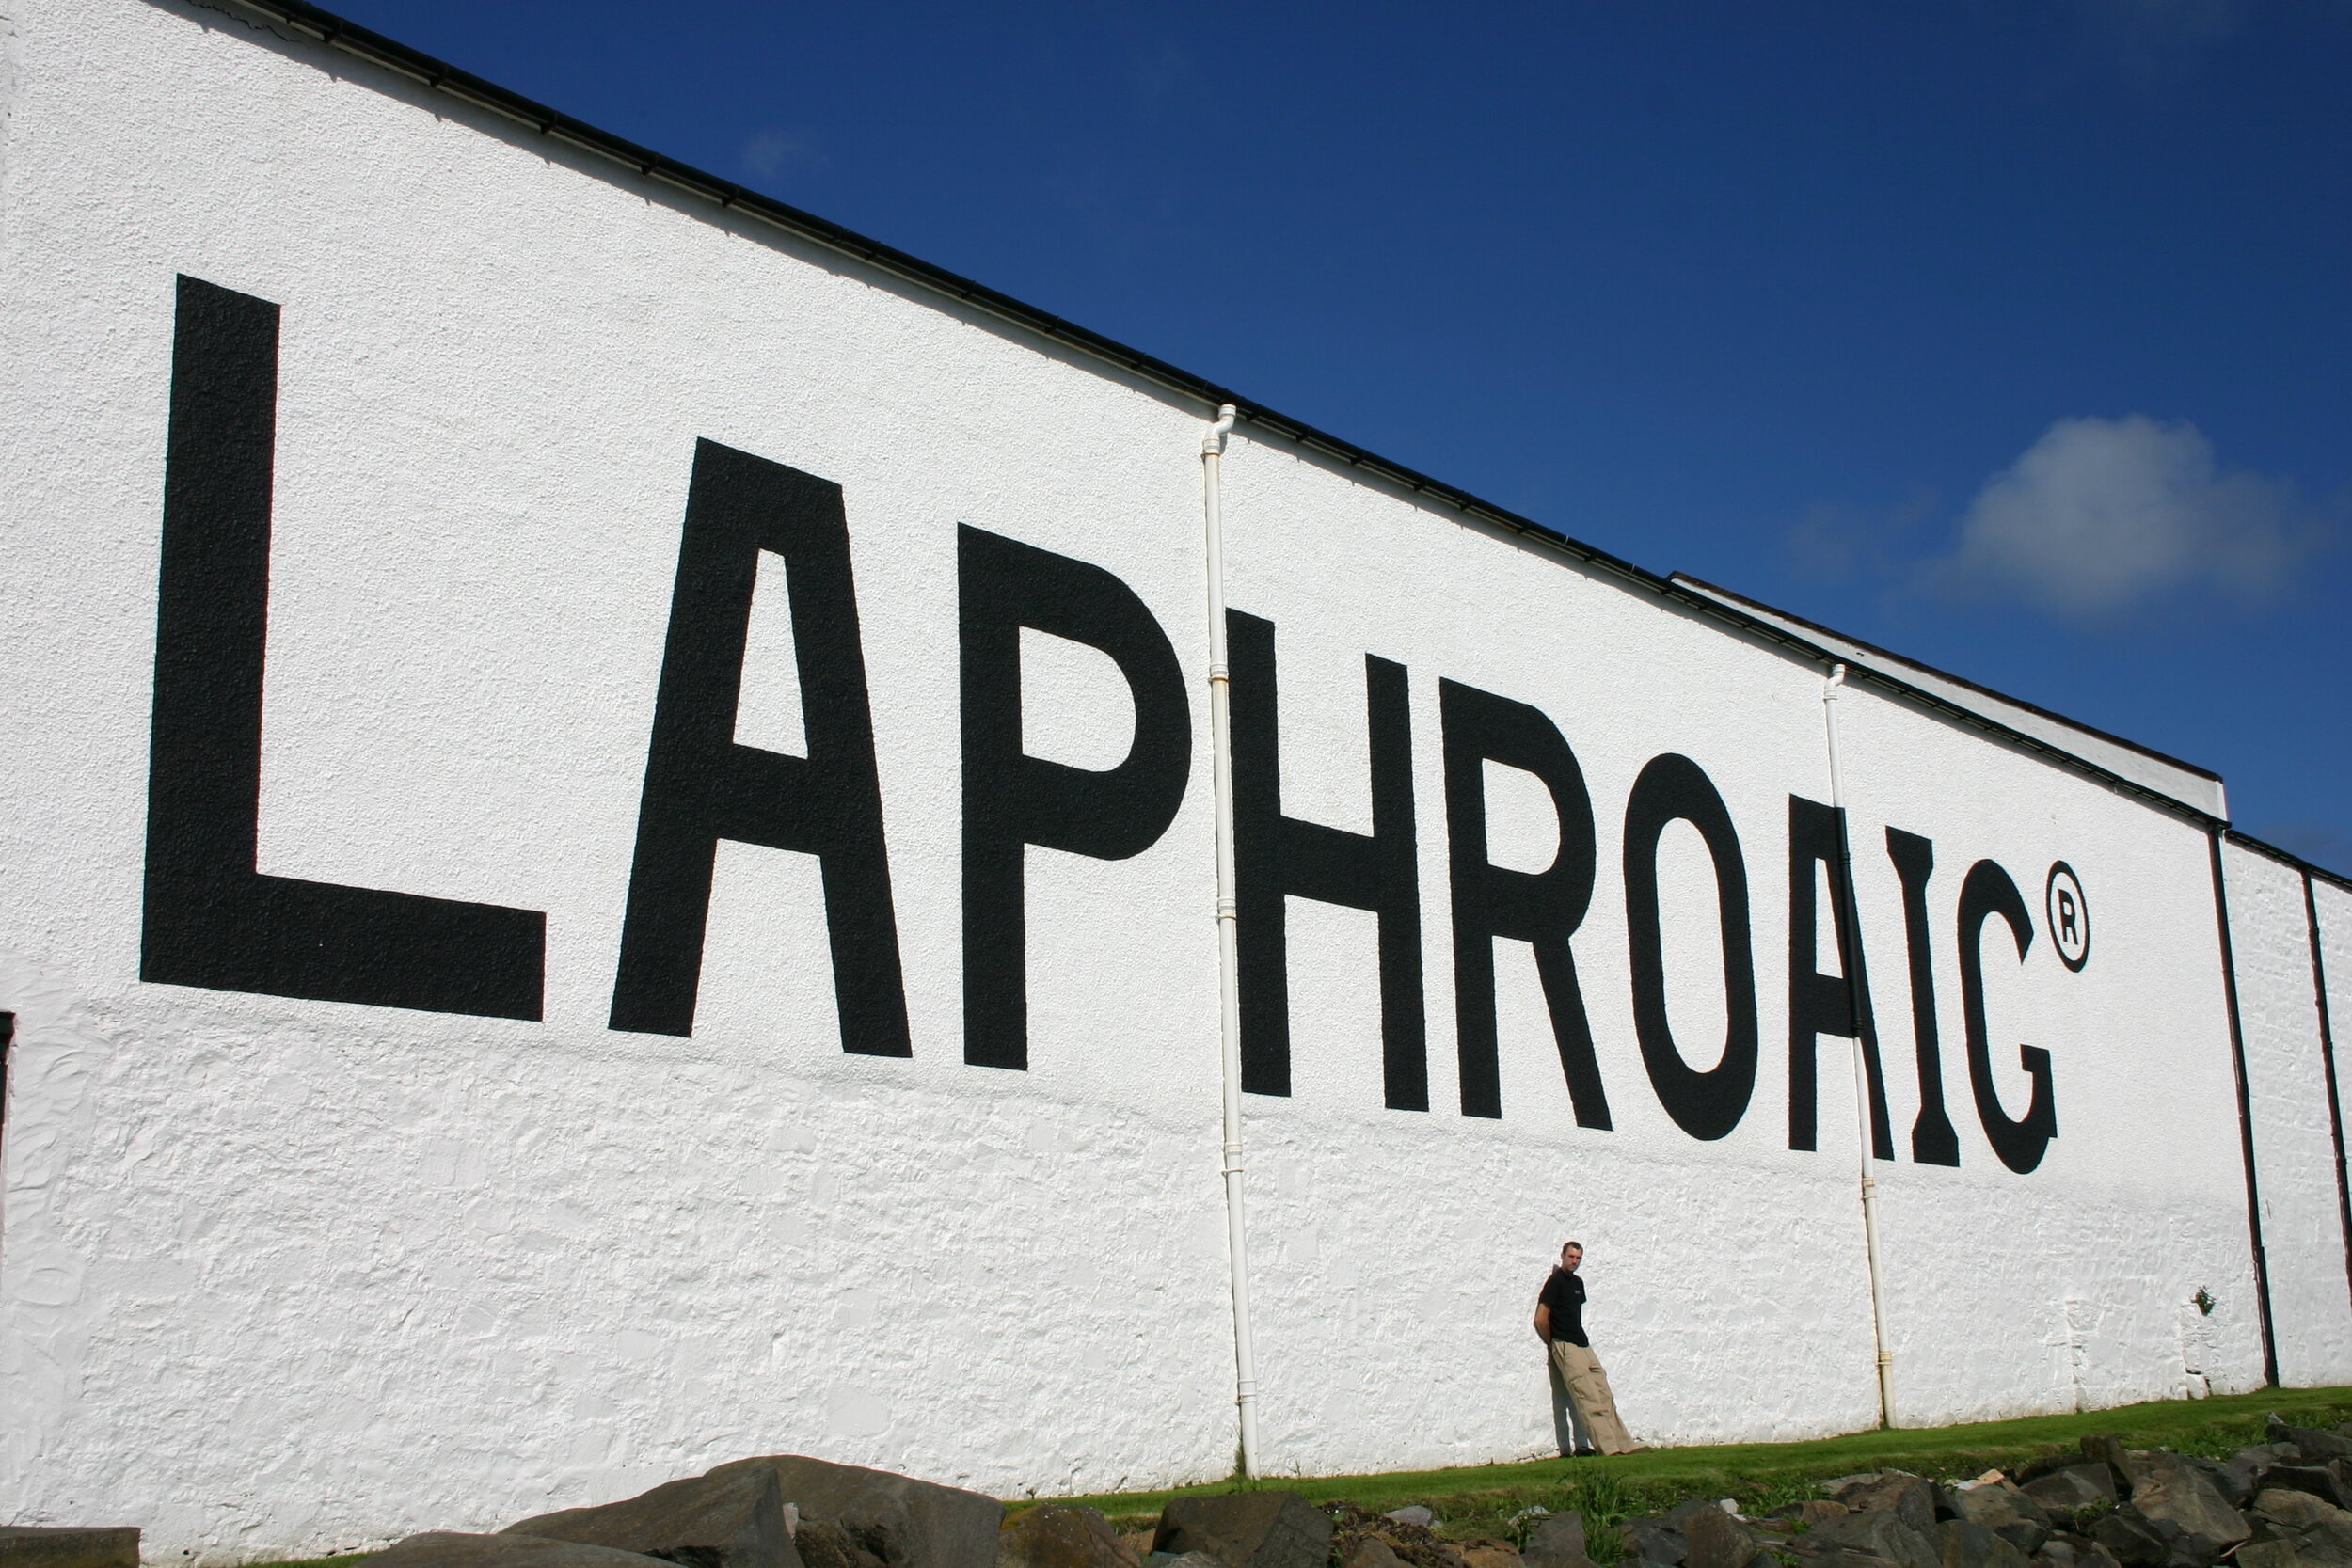 Laphroaig Distillery on Islay.jpg